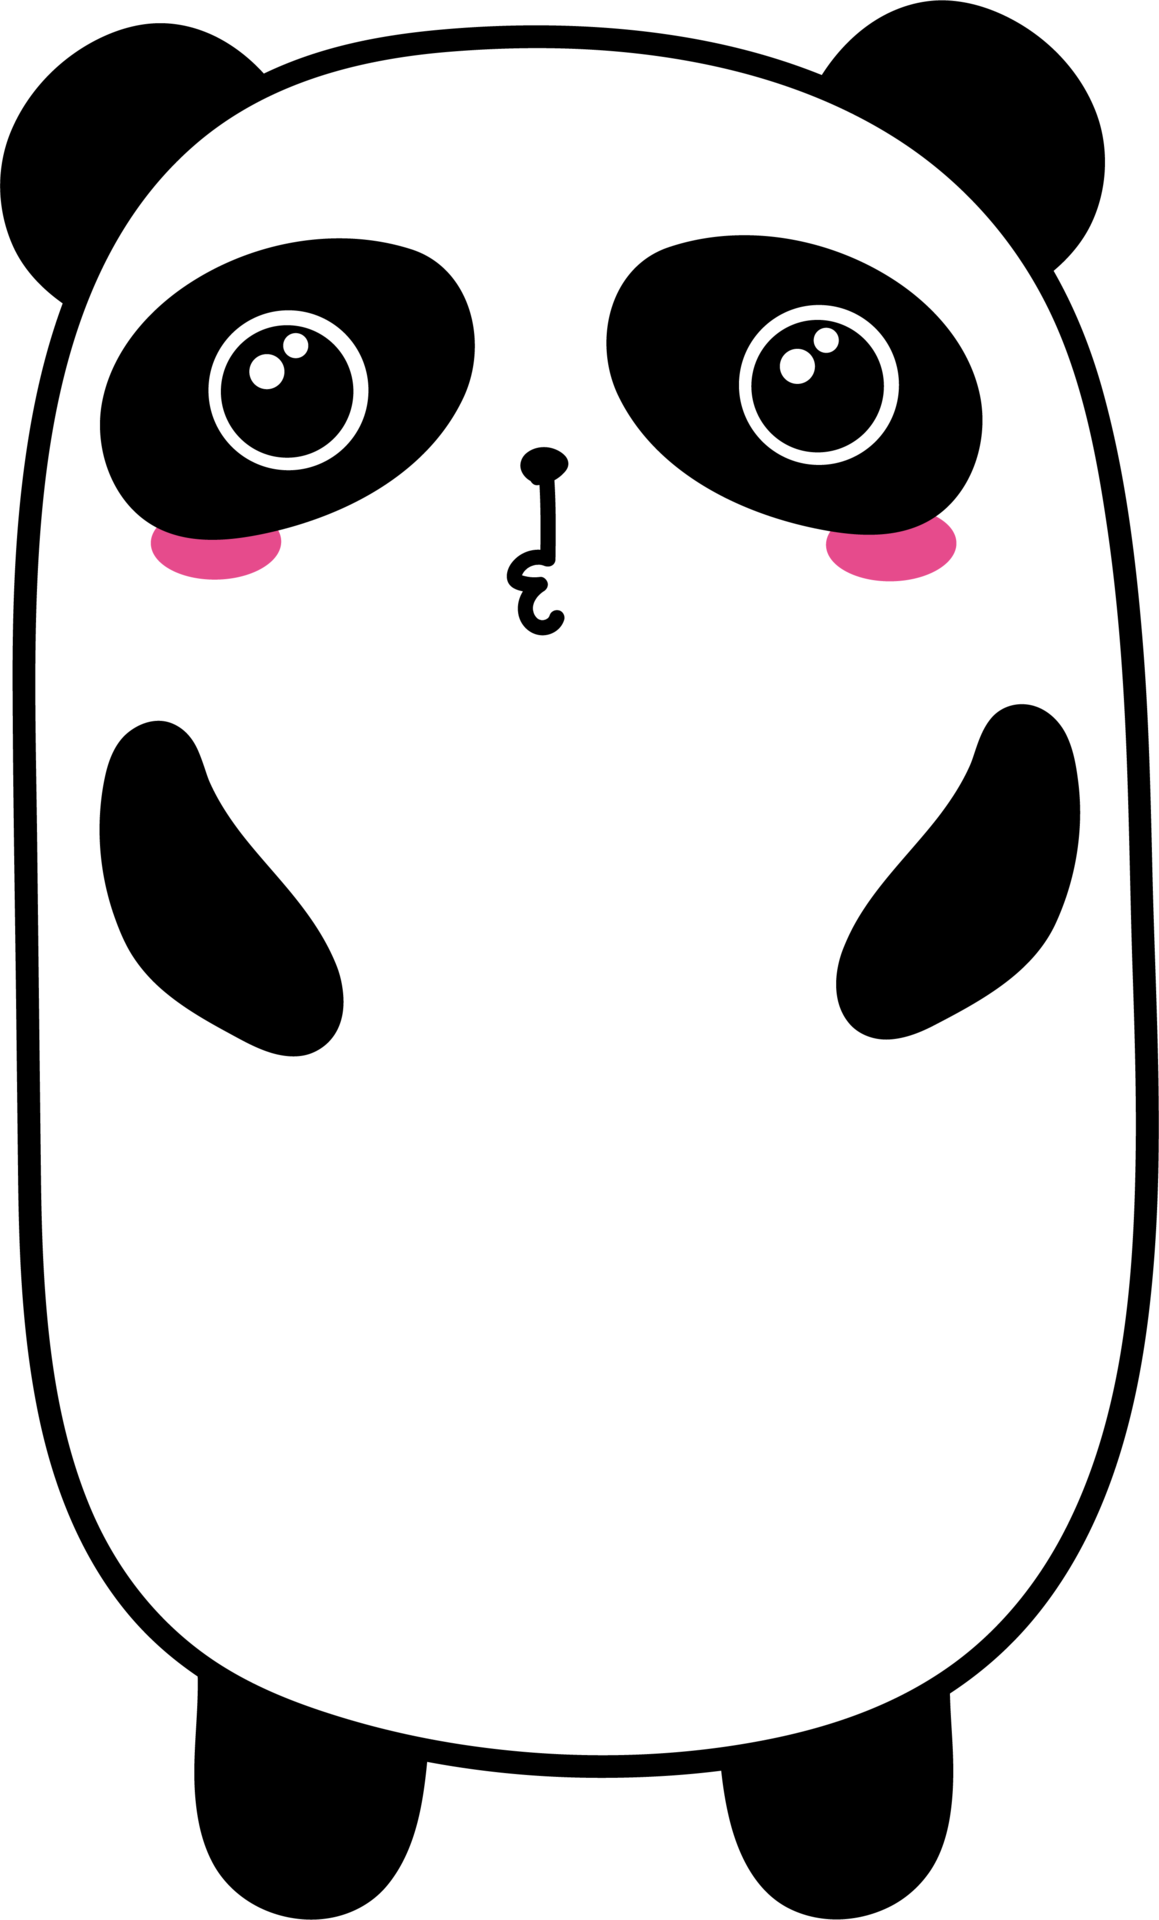 Cute panda cartoon on transparent background. 31628071 PNG